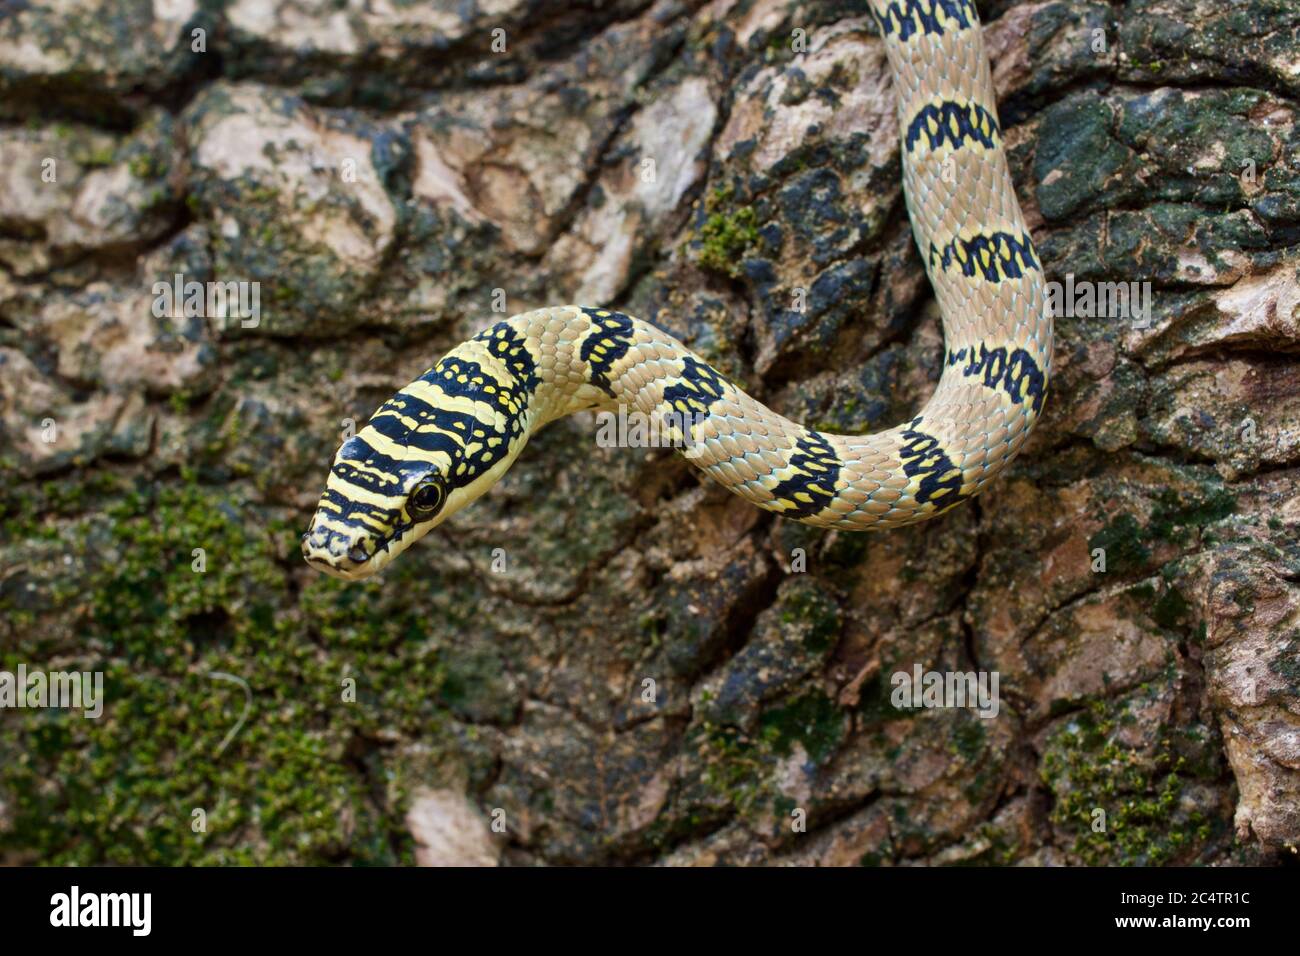 A Sri Lankan Flying Snake (Chrysopelea taprobanica) on a tree branch in Yala National Park, Sri Lanka Stock Photo